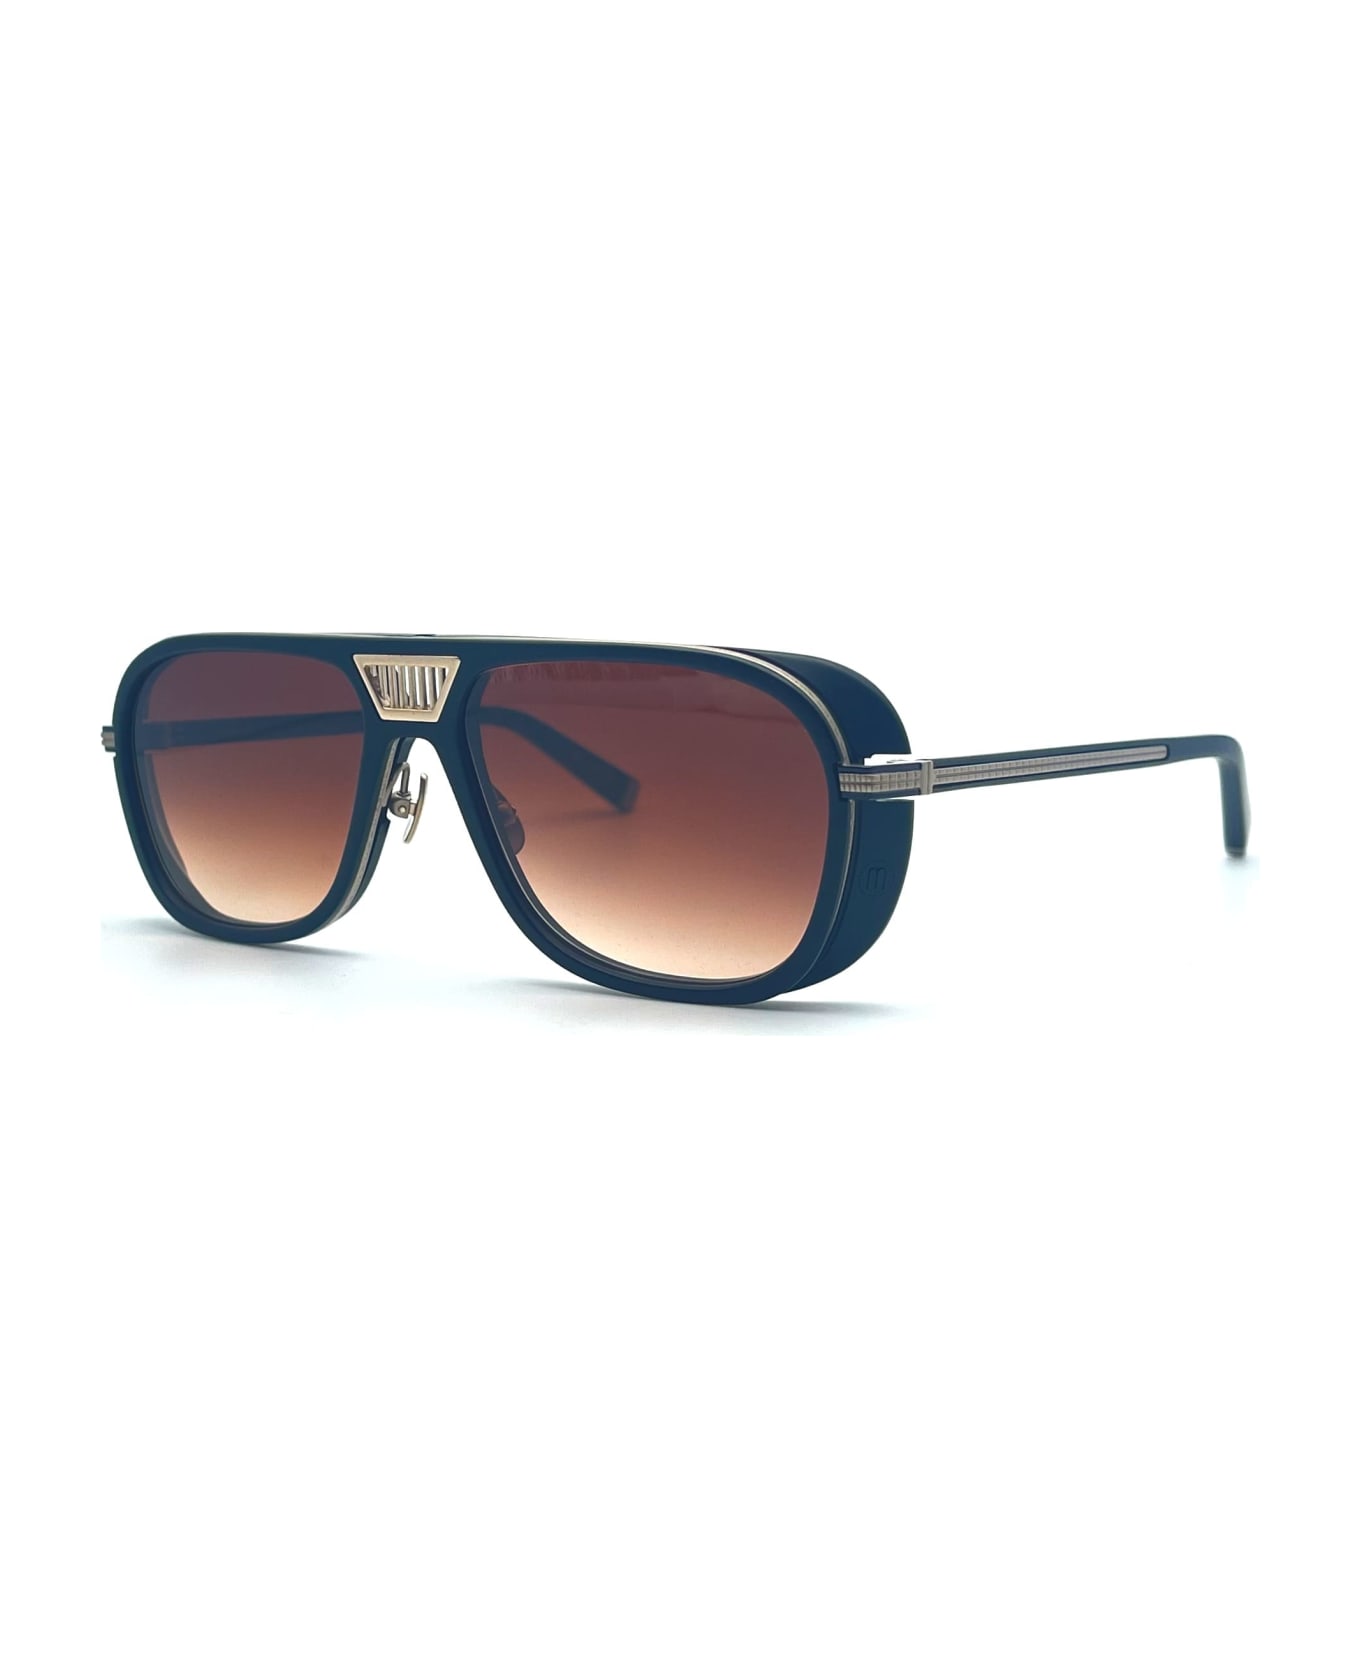 Matsuda M3023-v2 - Matte Gold Sunglasses - Matte black サングラス